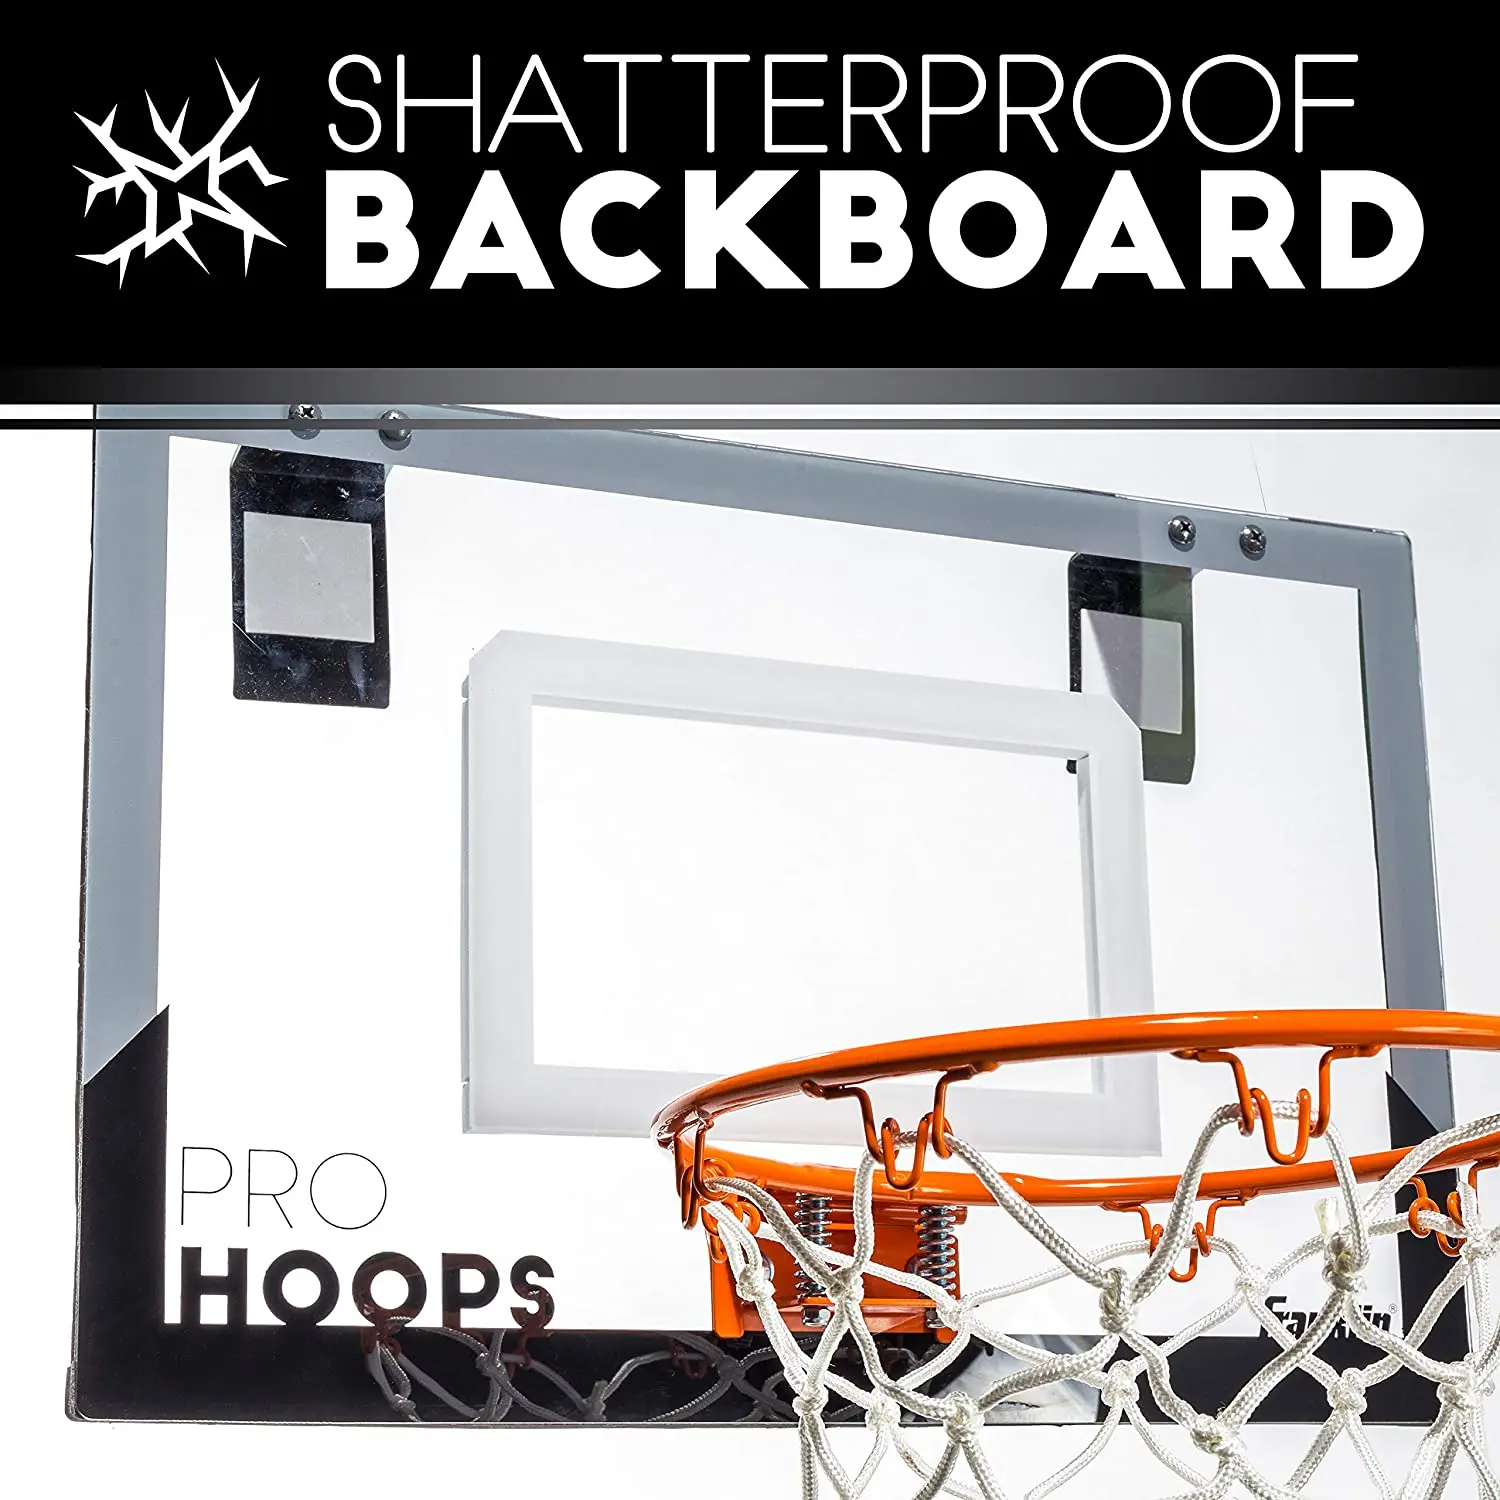 portable mini basketball hoop indoor for home or office basketball hoops for kids Portable Adjustable Basketball Stand Hoop